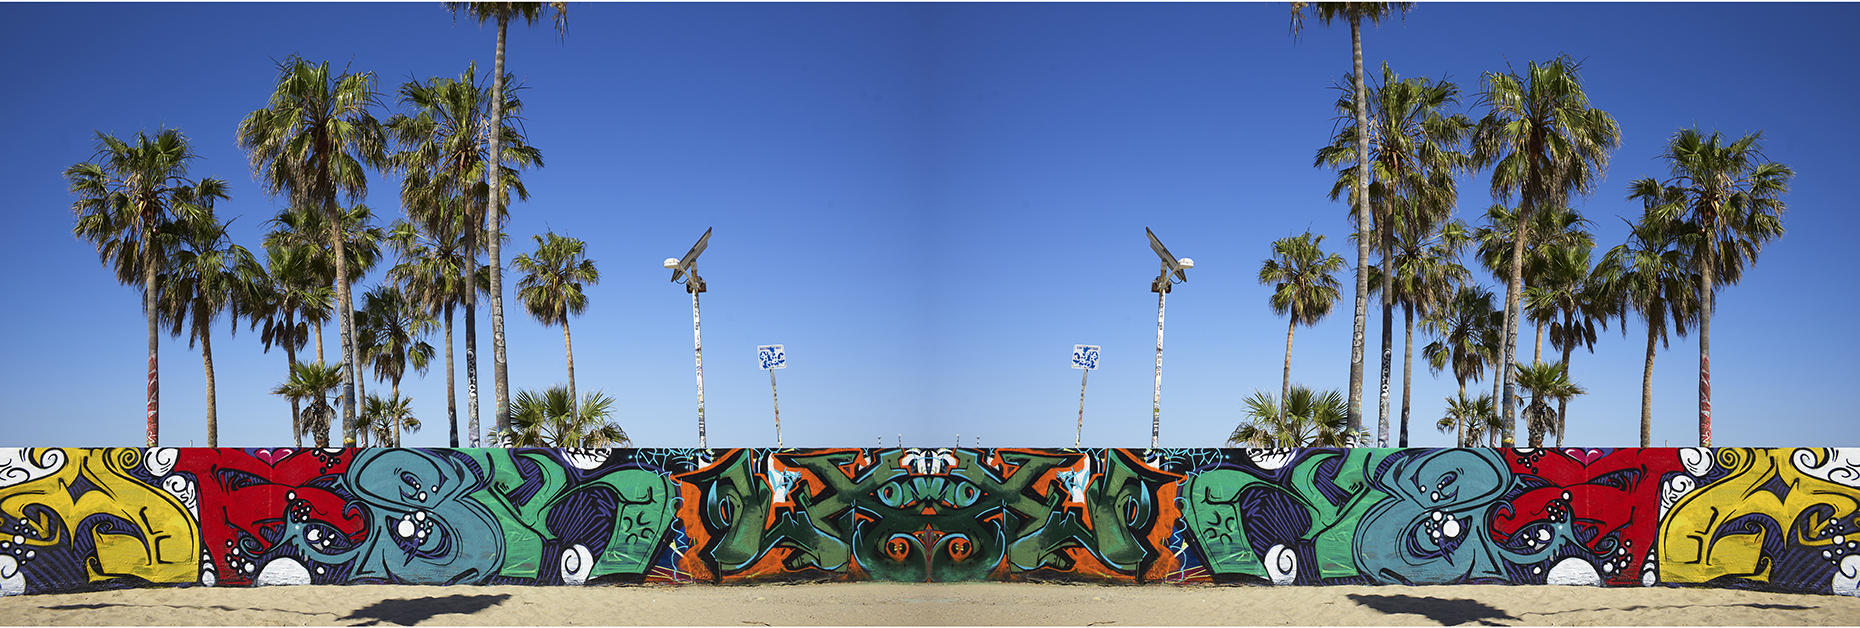 Graffiti I LA